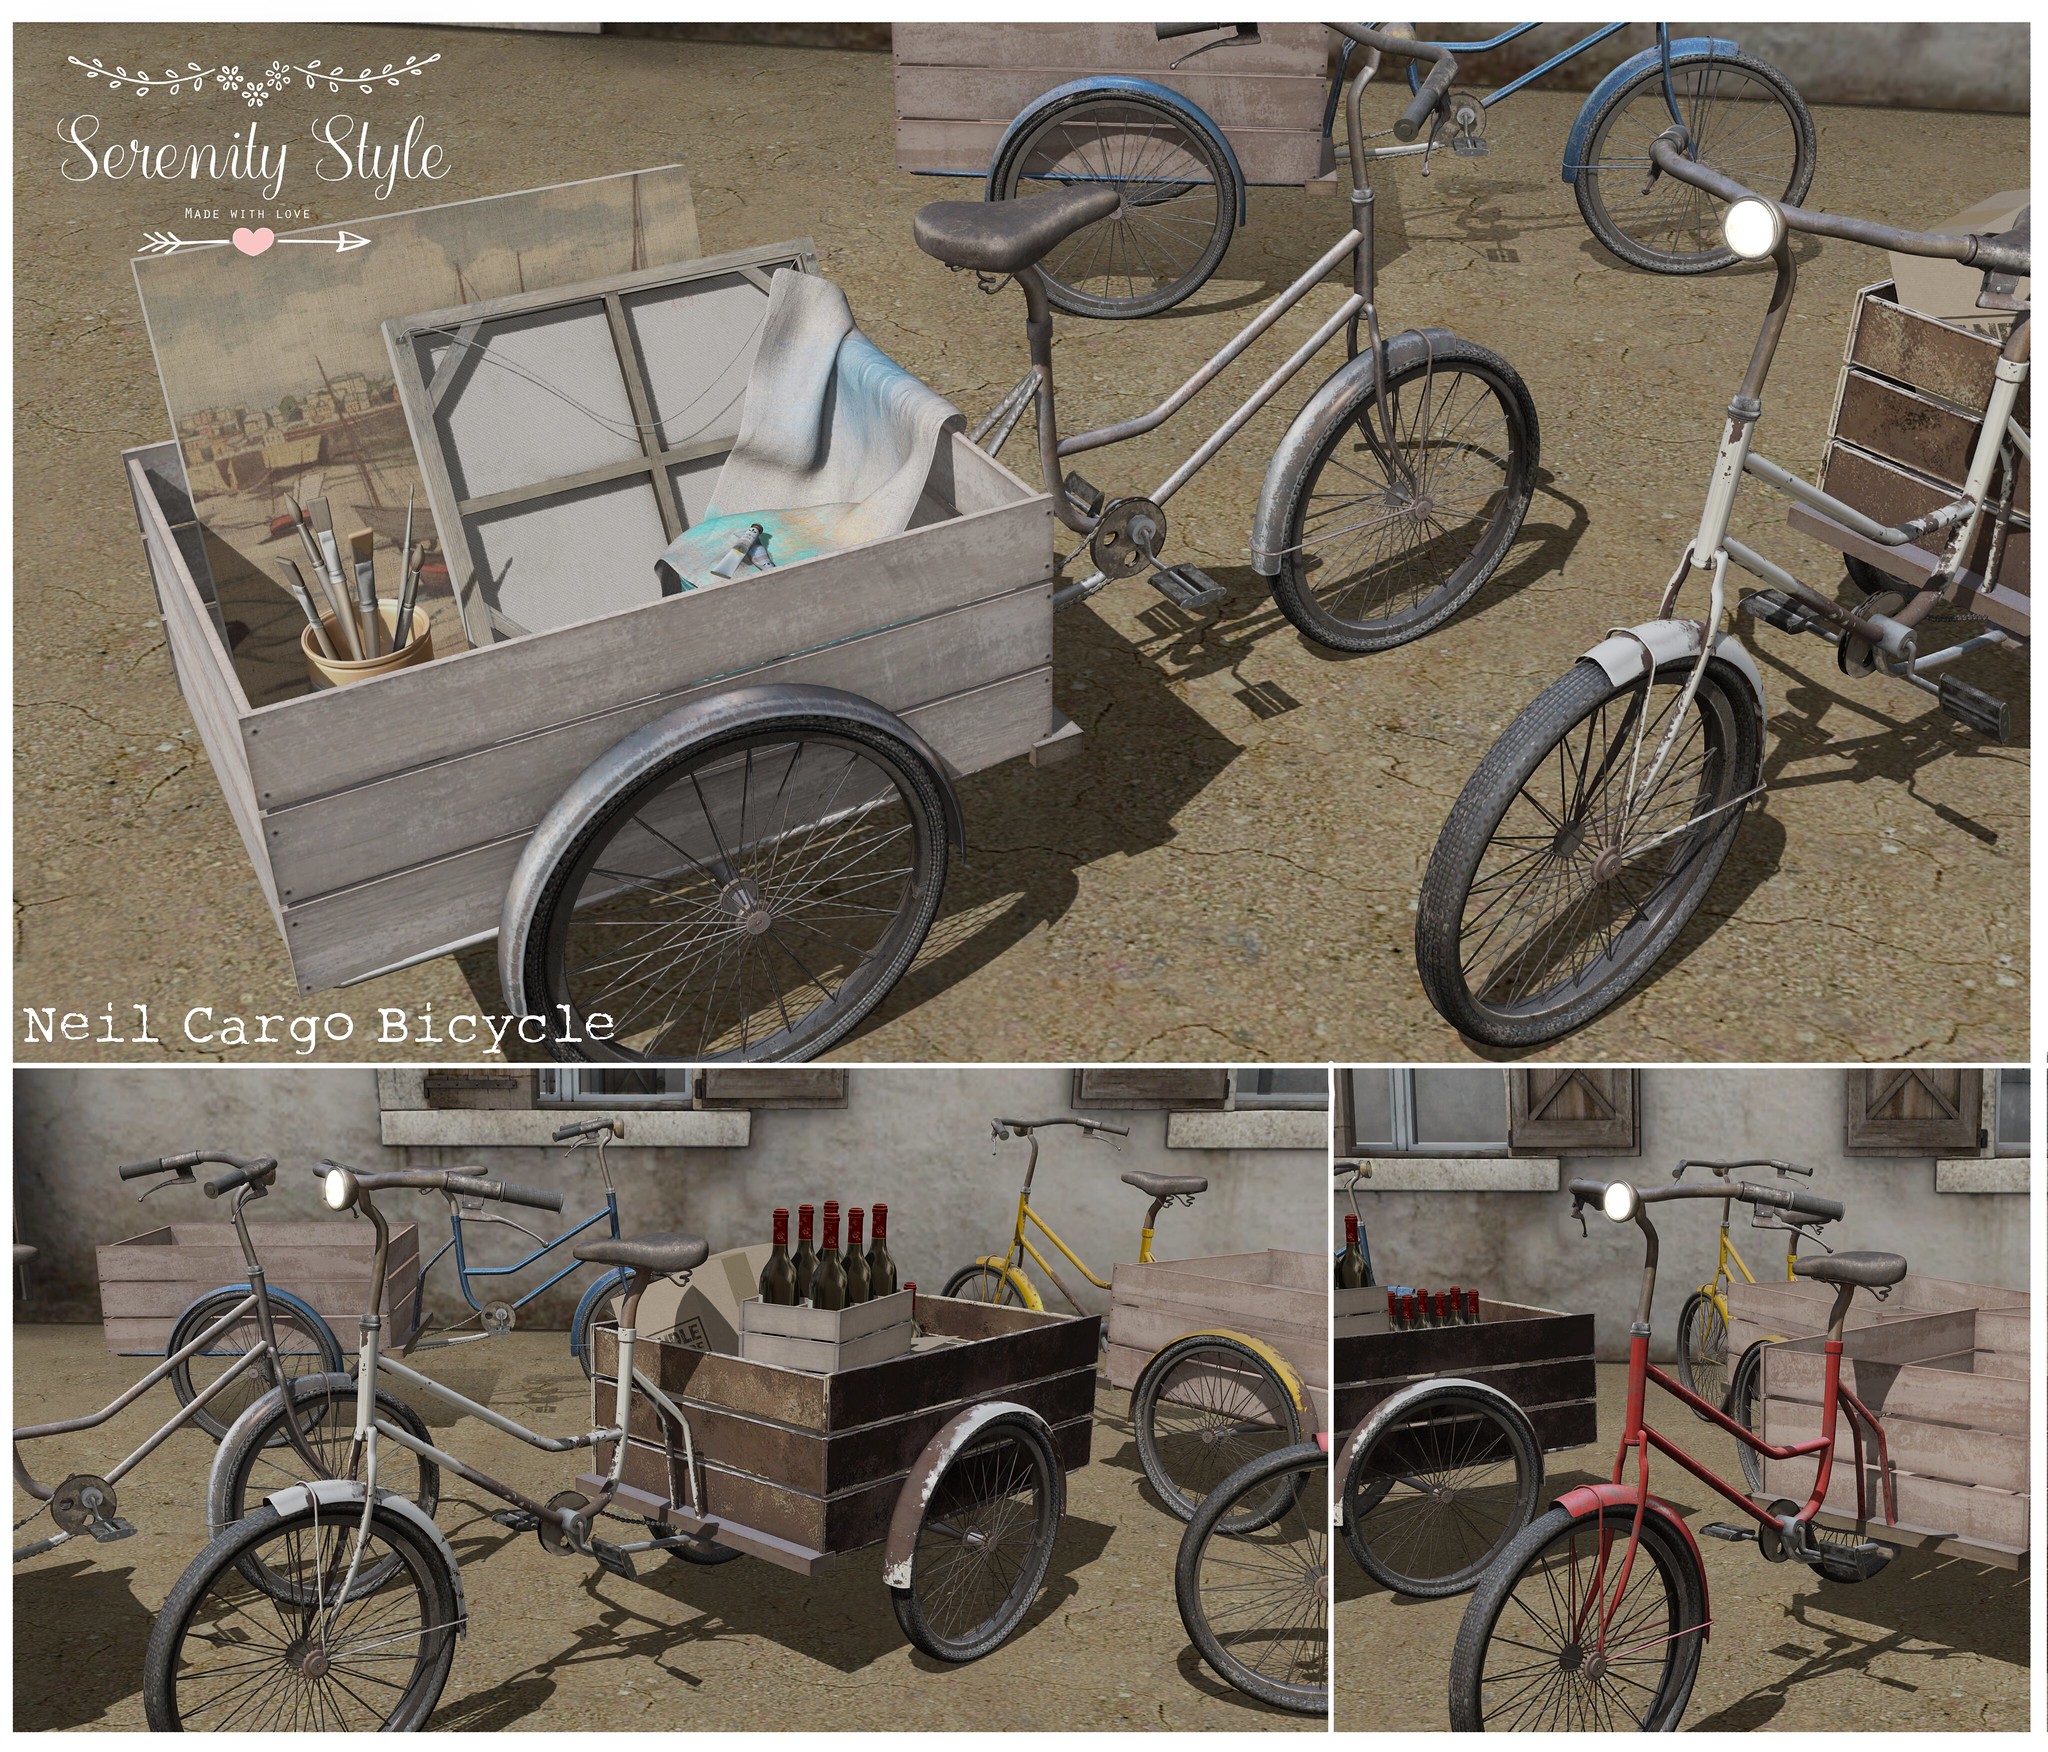 Serenity Style – Neil Cargo Bicycle Gacha